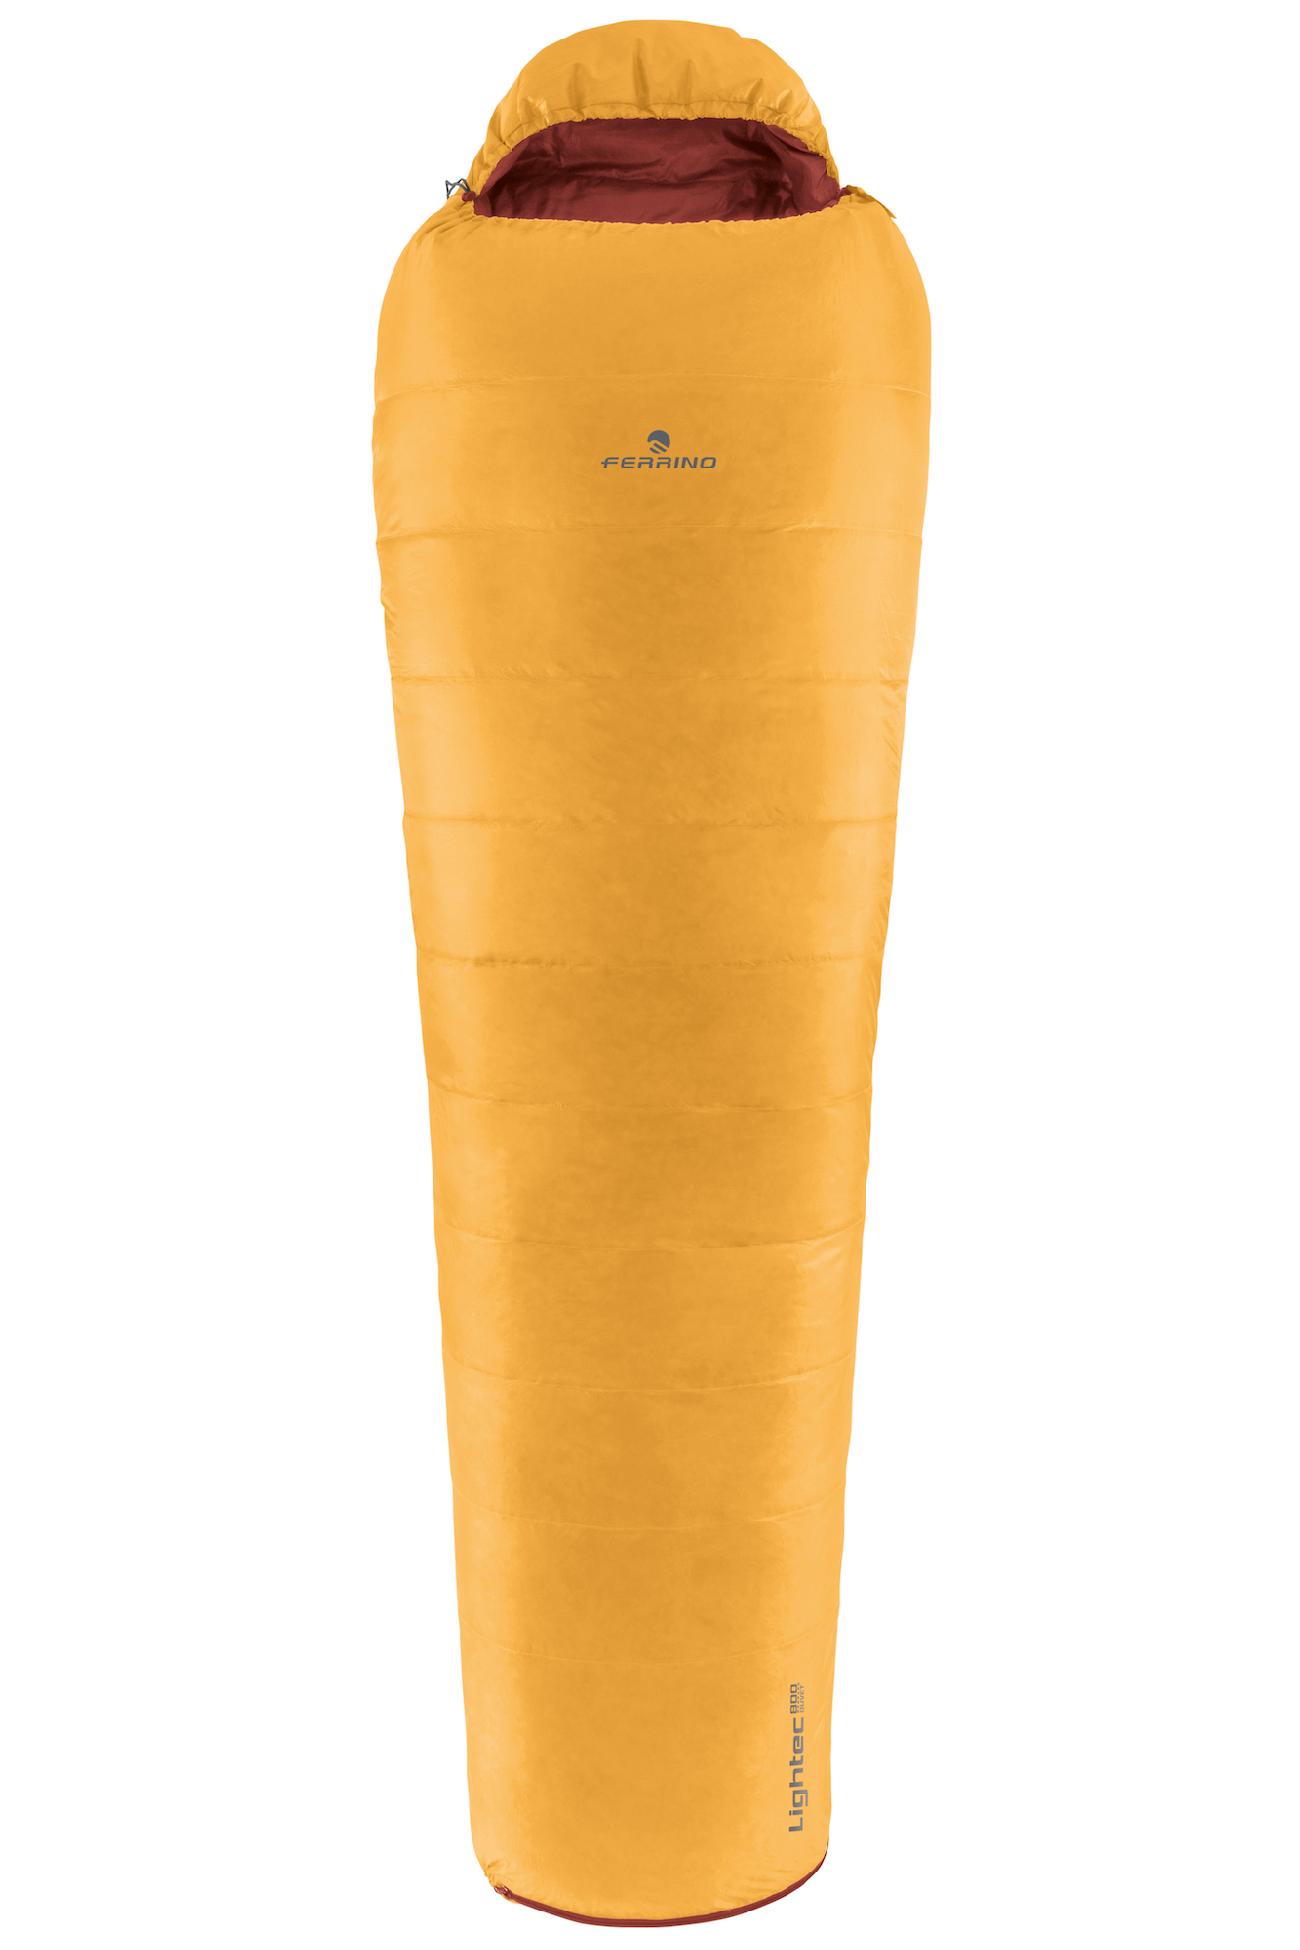 Ferrino Lightec 800 Quilt - sac de couchage en duvet